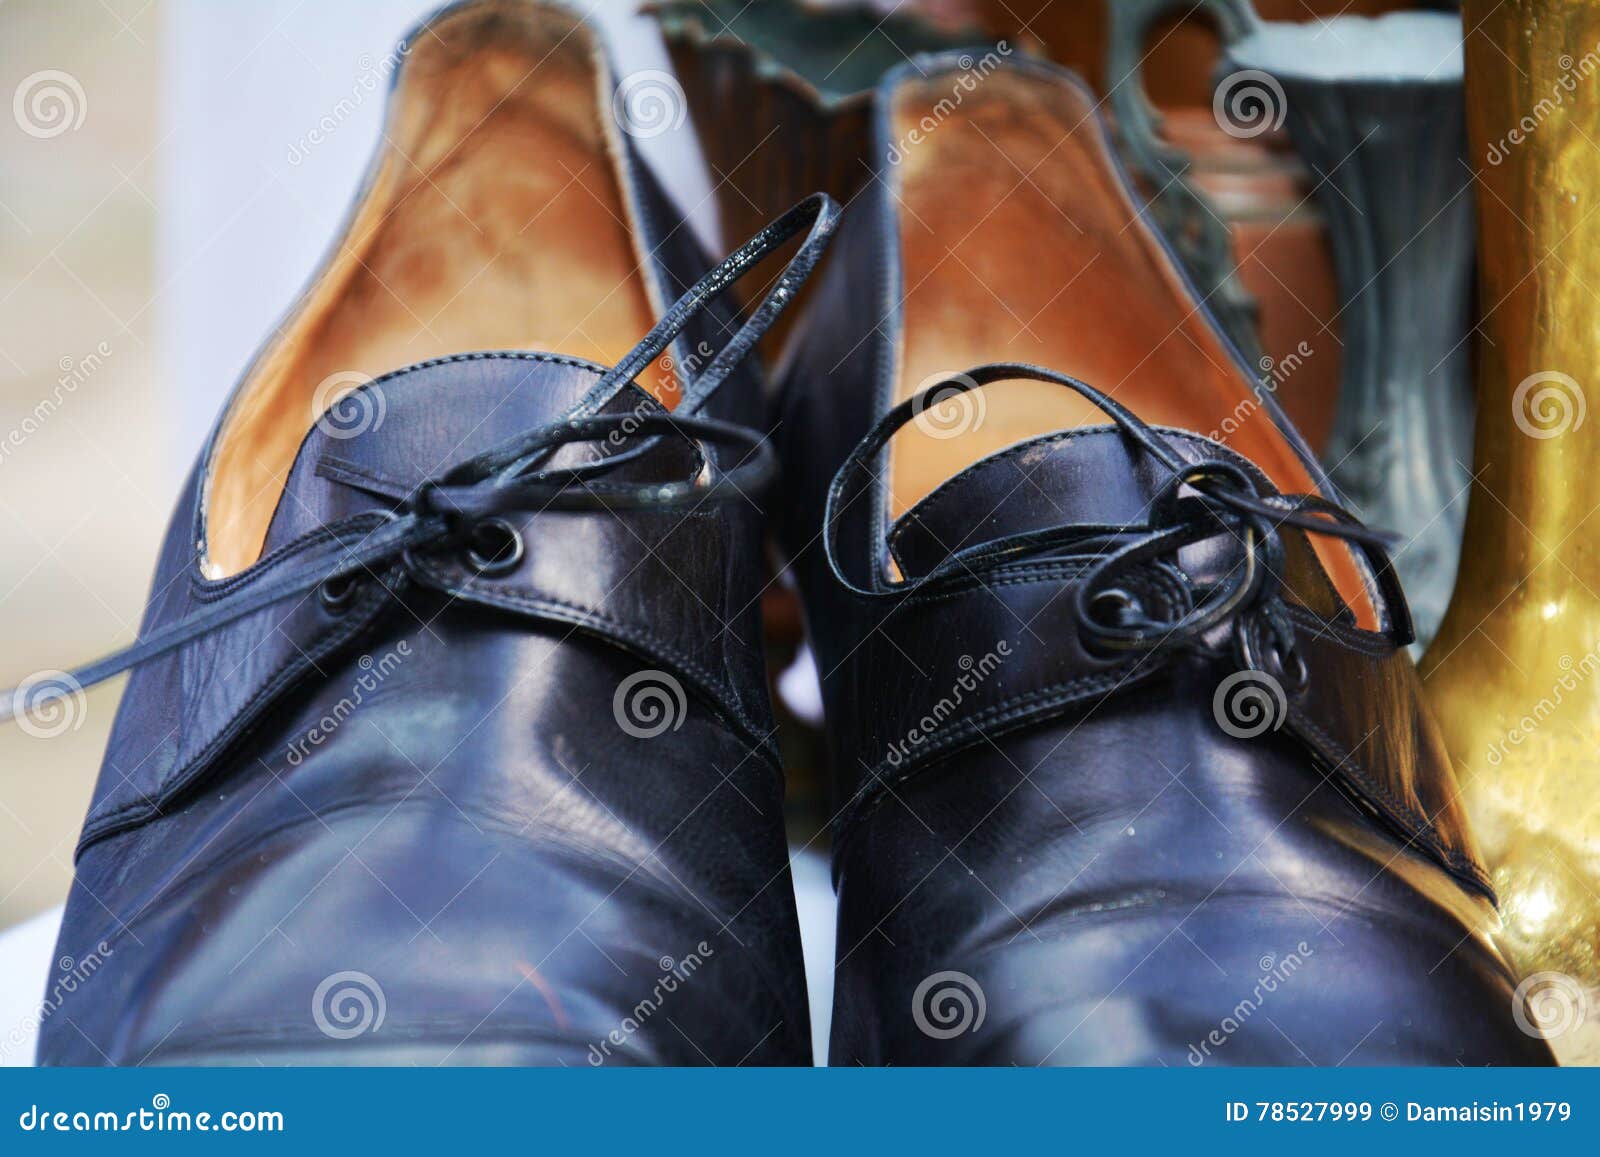 Old shoes background stock image. Image of elegance, construction ...